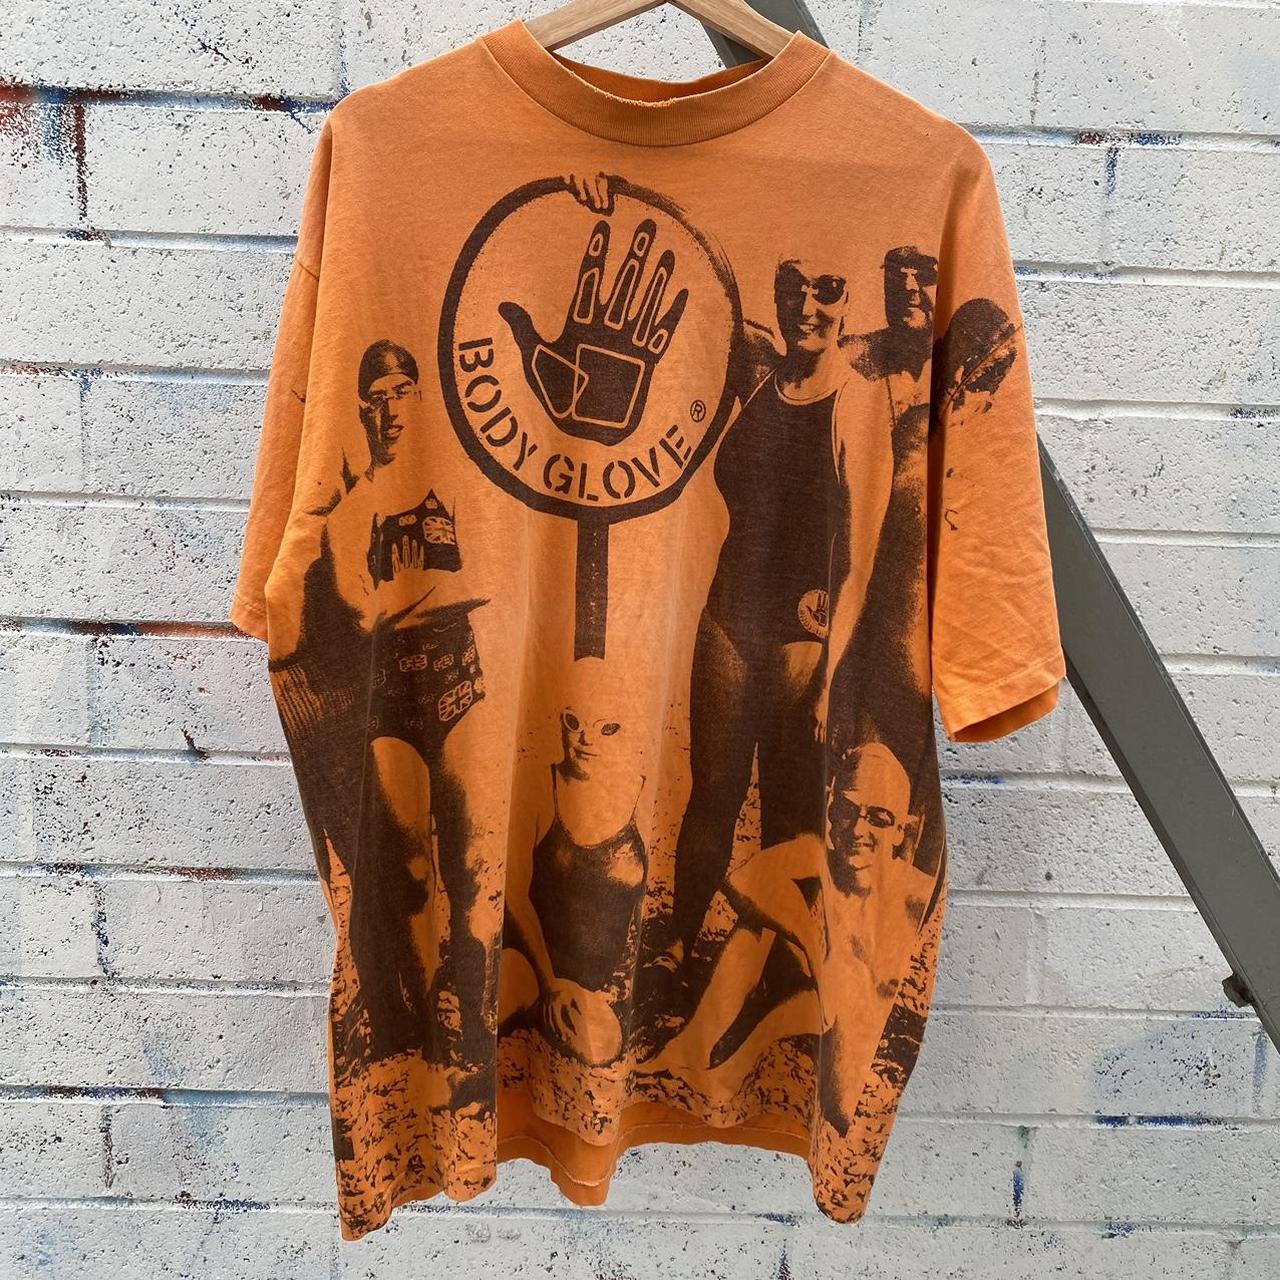 Body Glove Men's Orange T-shirt (8)